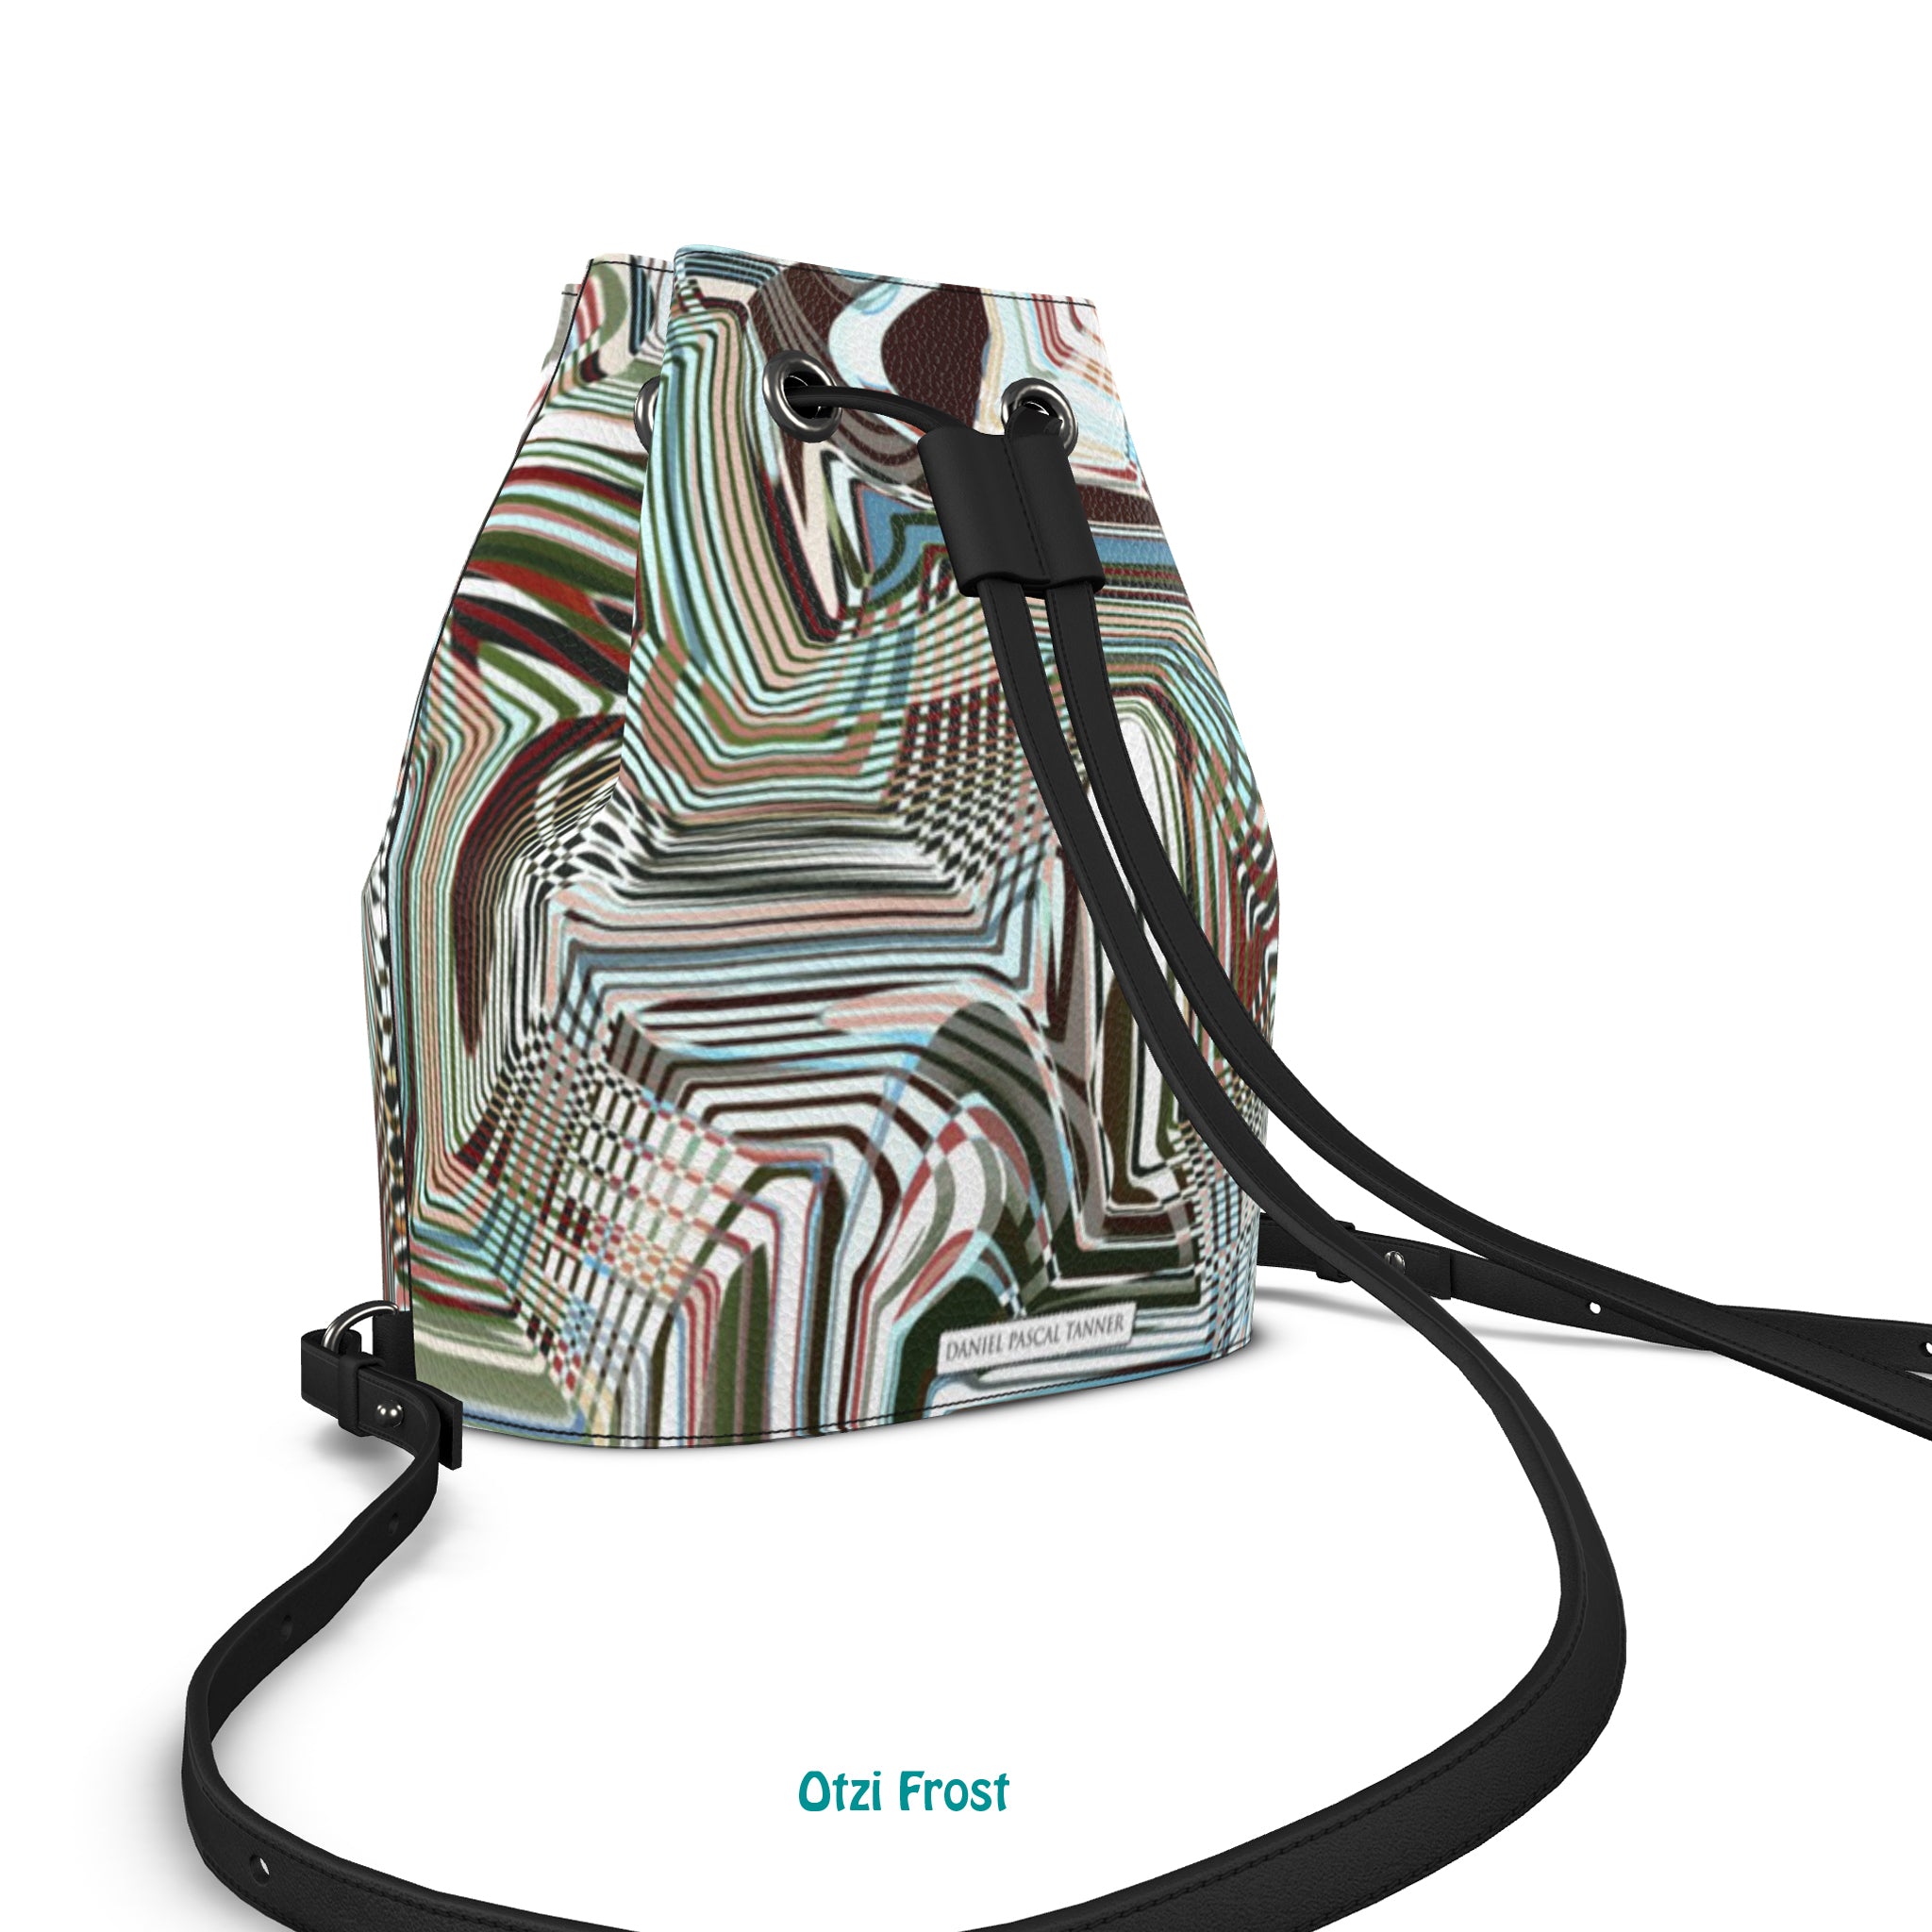 "La Clique” Mini Backpack in Ötzi Frost